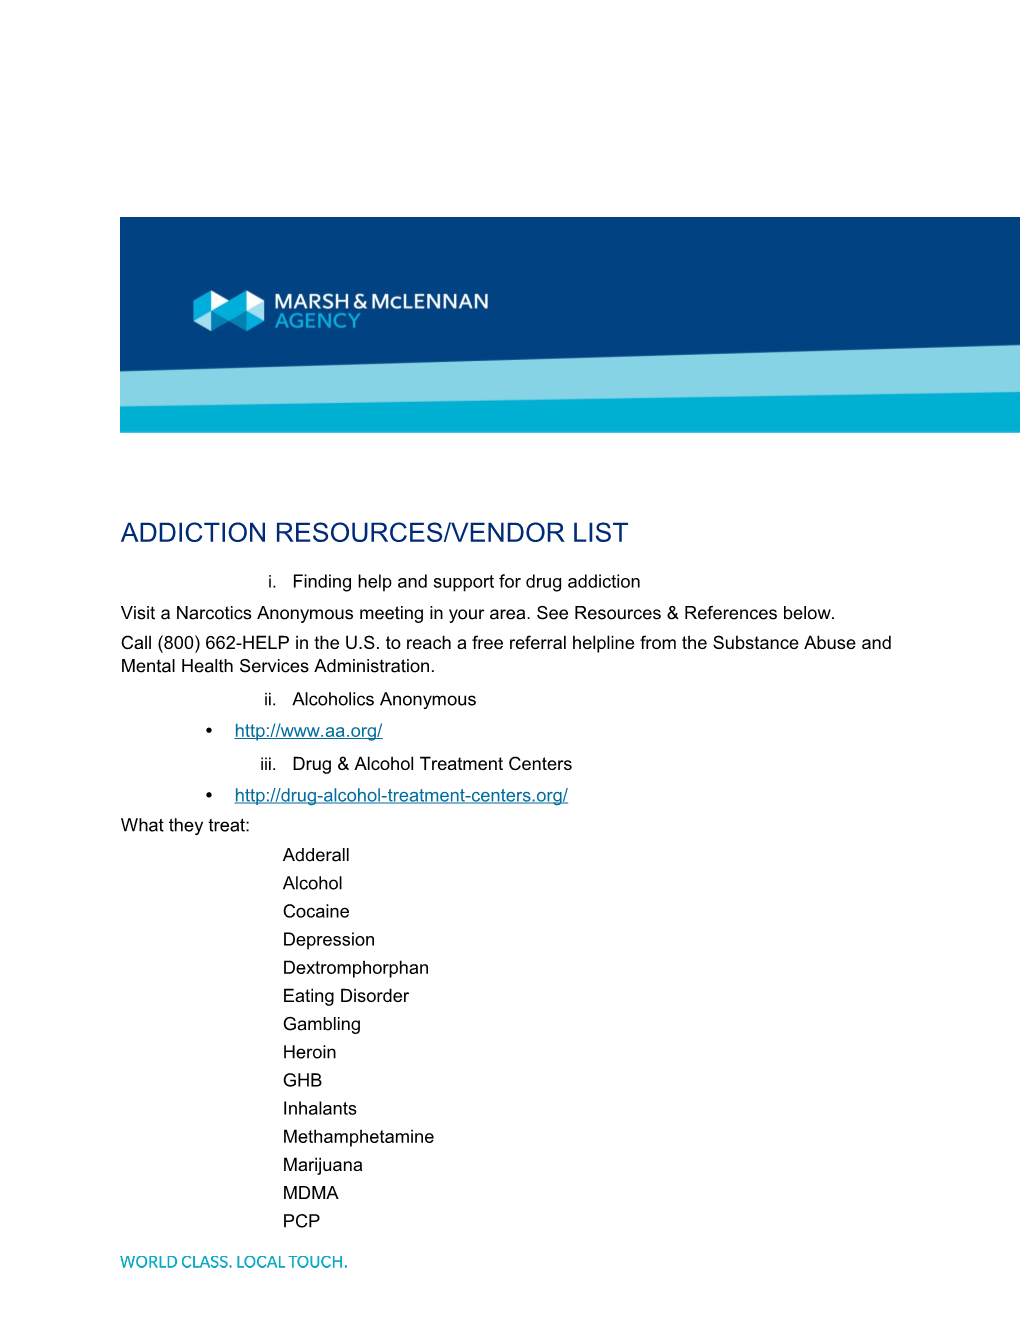 Addiction Resources/Vendor List